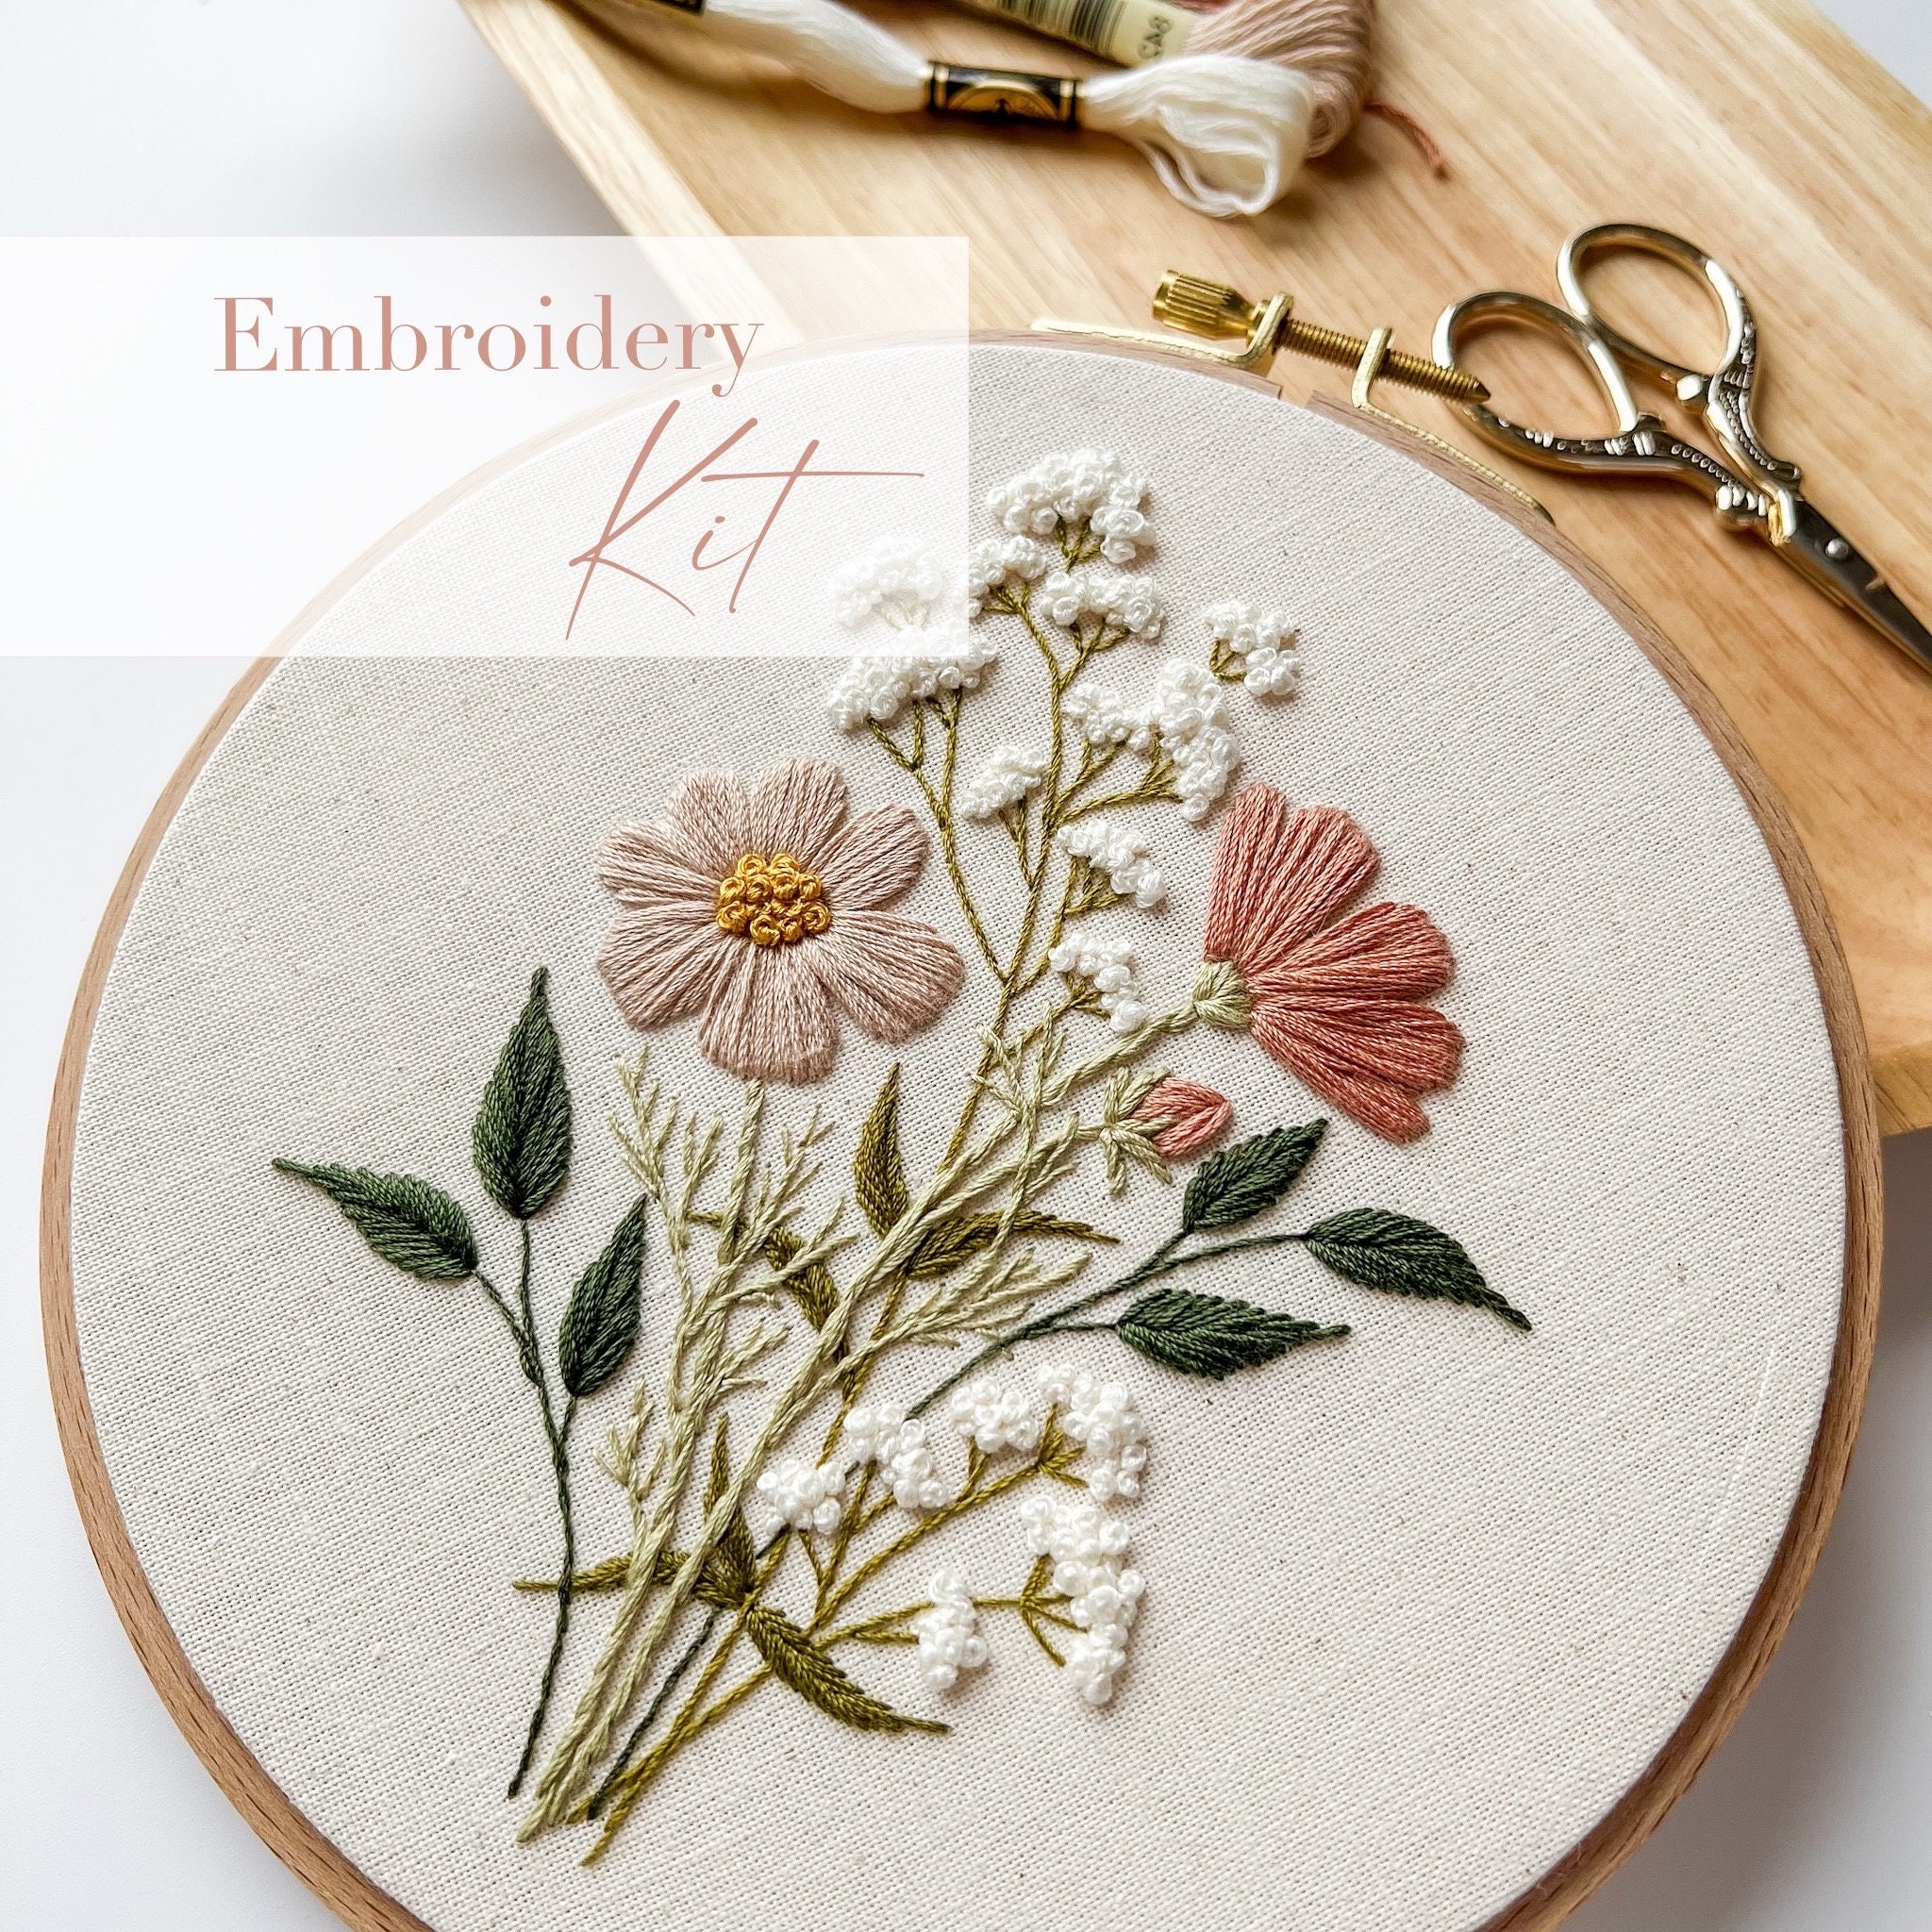 DIY Flower Embroidery Kit for Beginner Pattern Printed Needlework